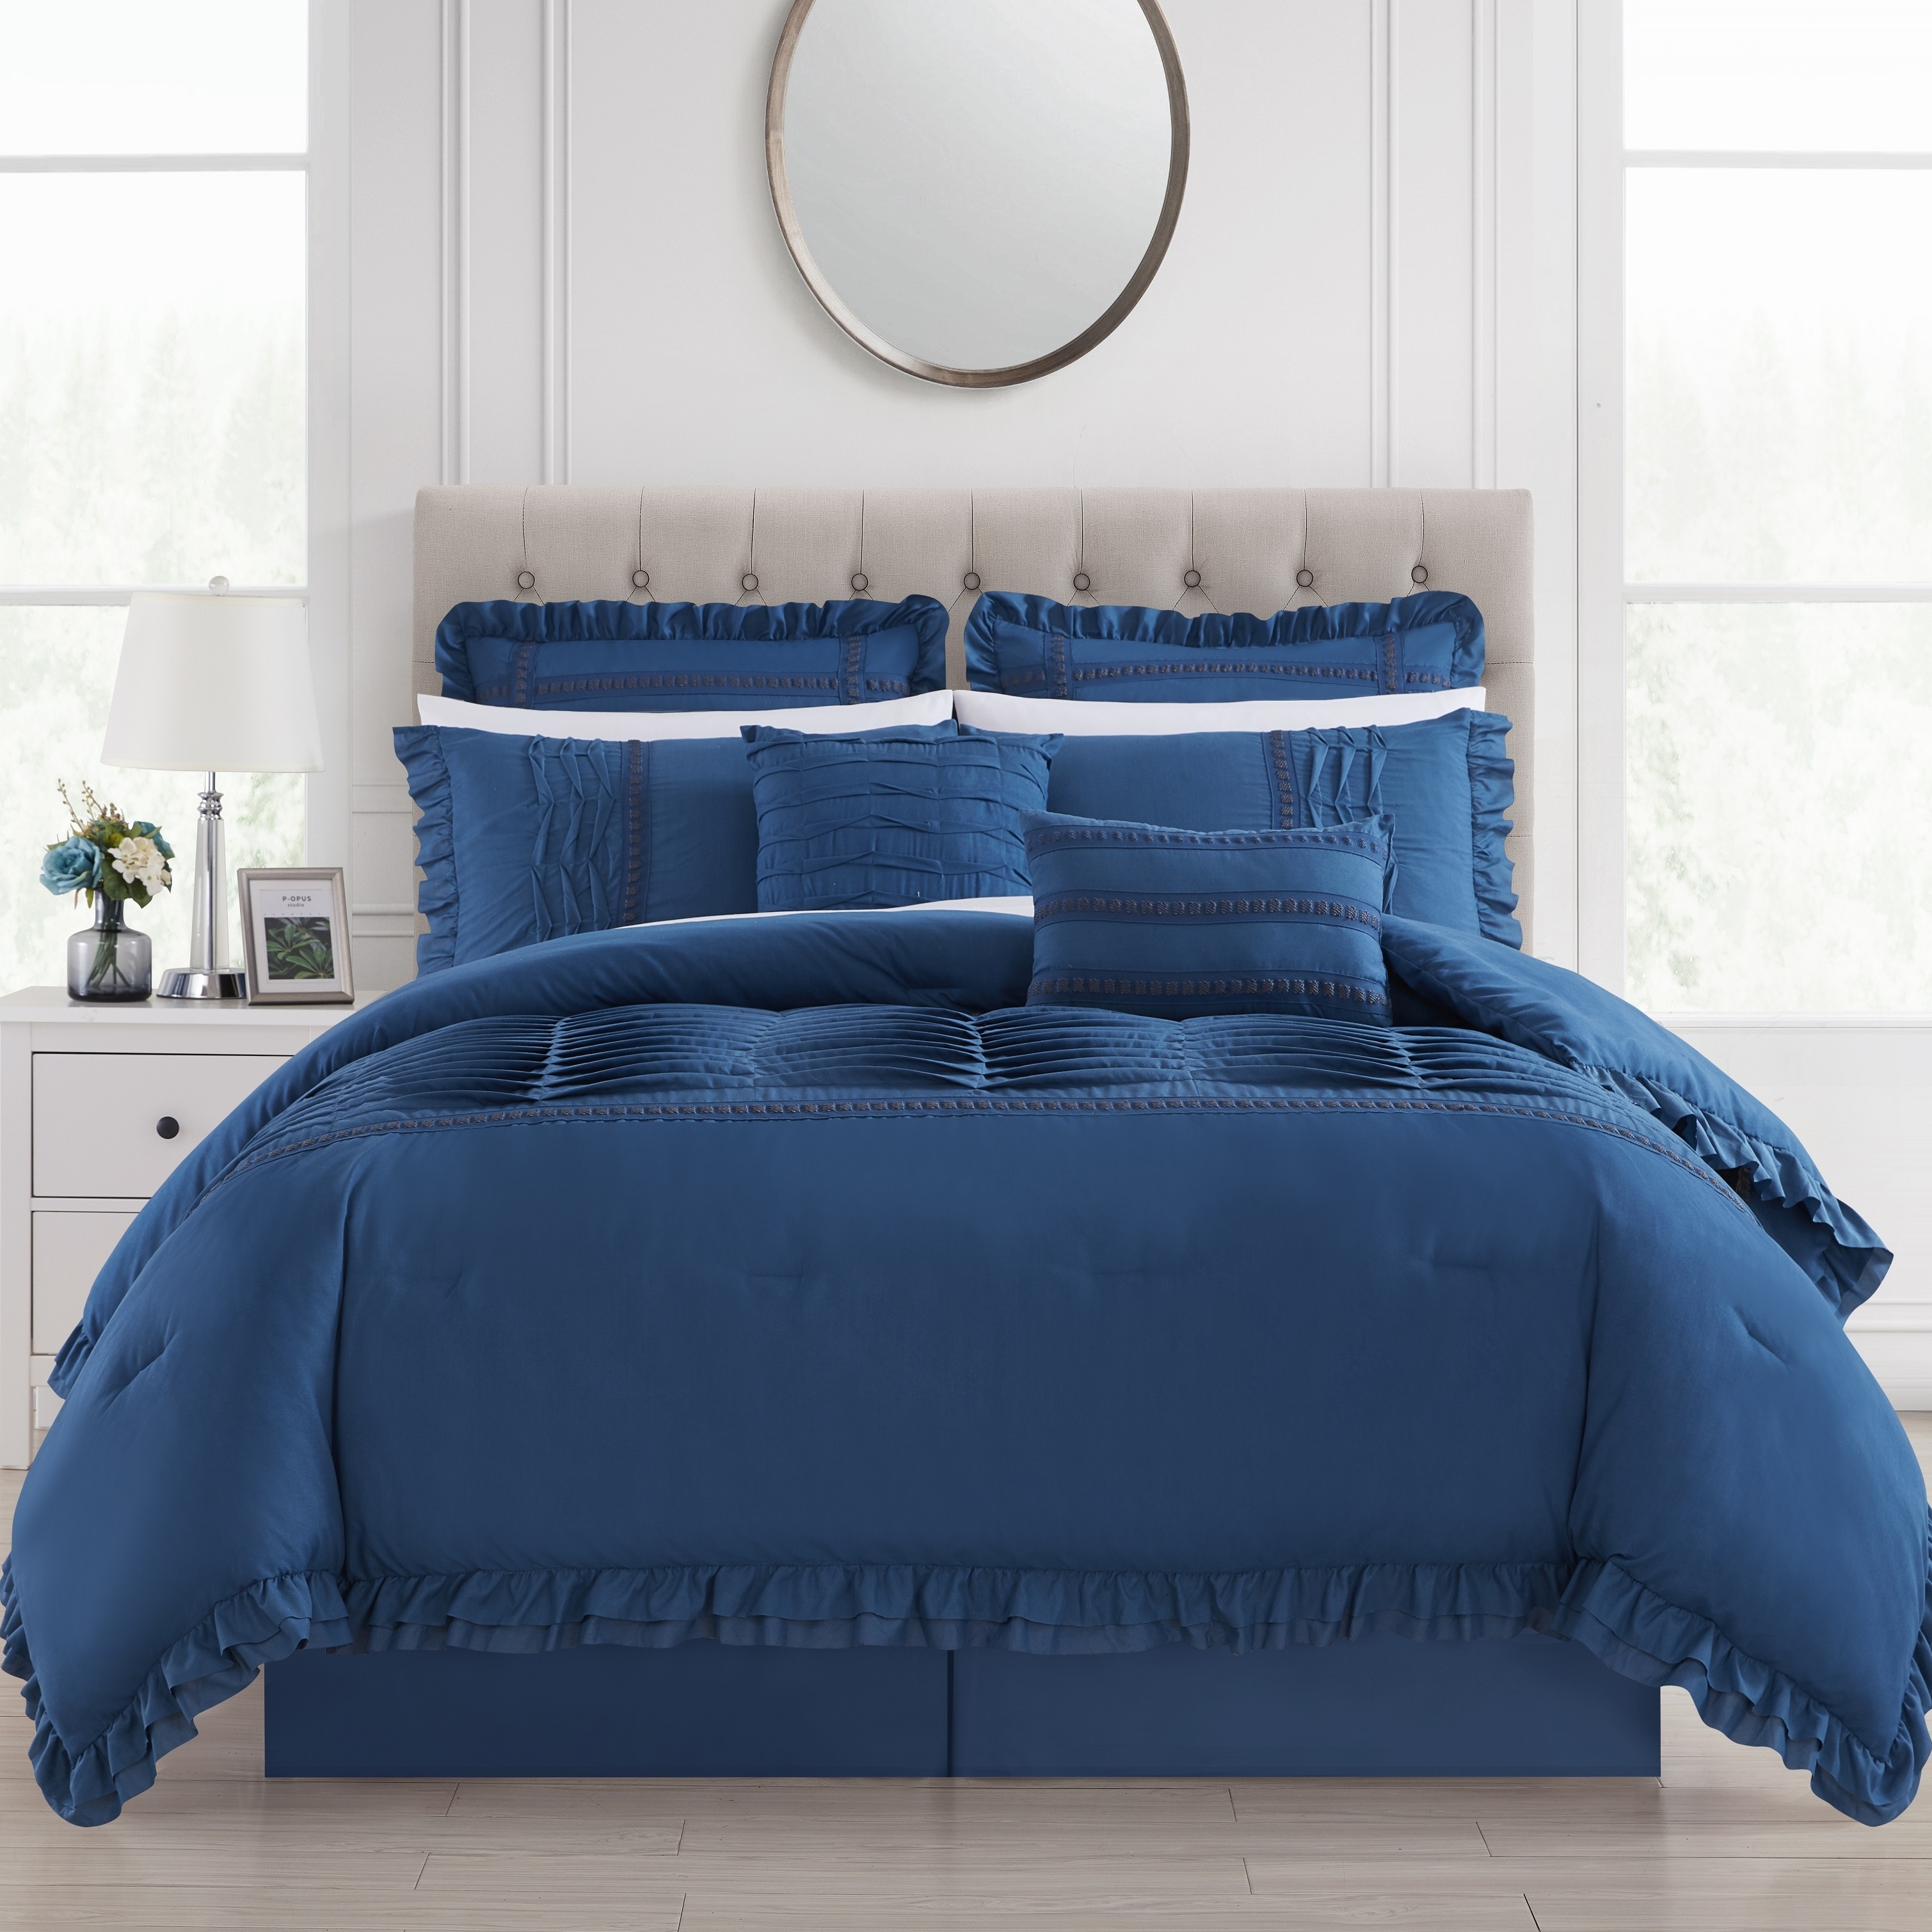 Yvonna 8 Piece Comforter Set Ruffled Pleated Flange Border Design Bedding - Blue, King